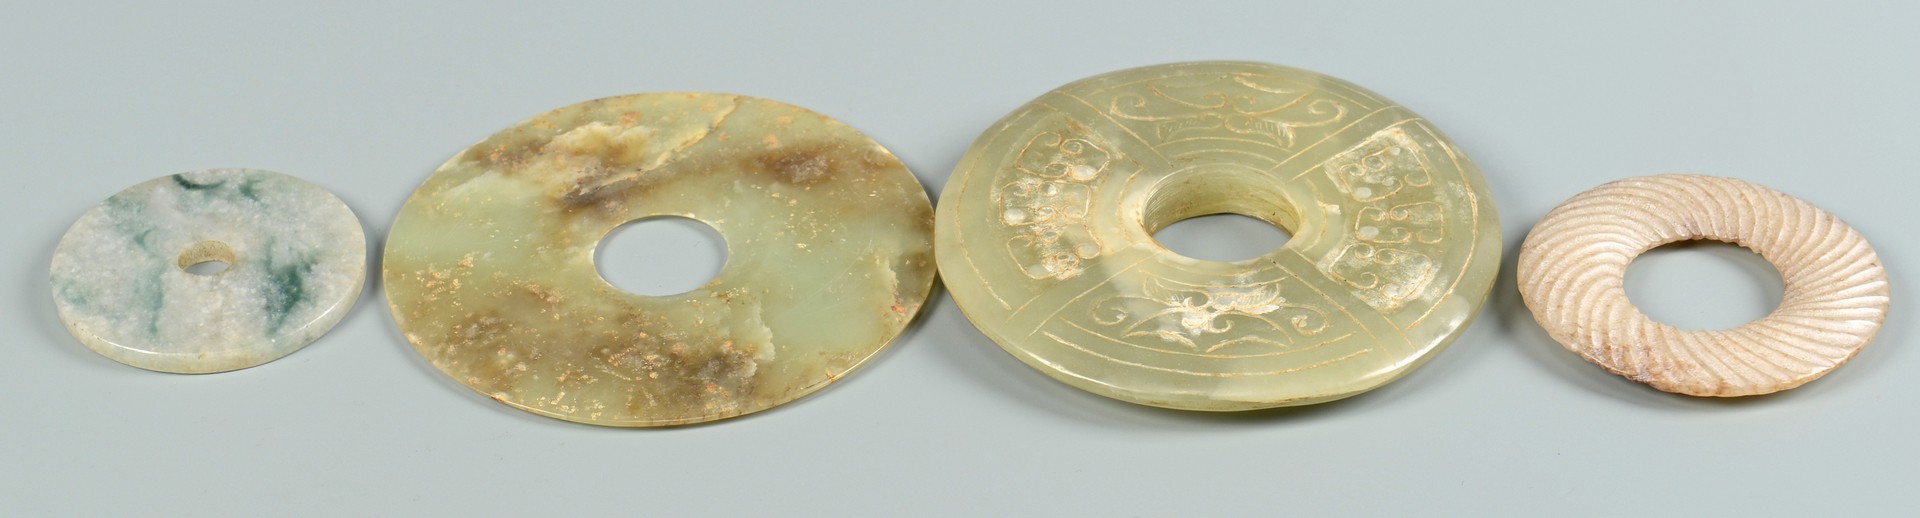 Lot 705: Jade bi discs and axe head, 5 items